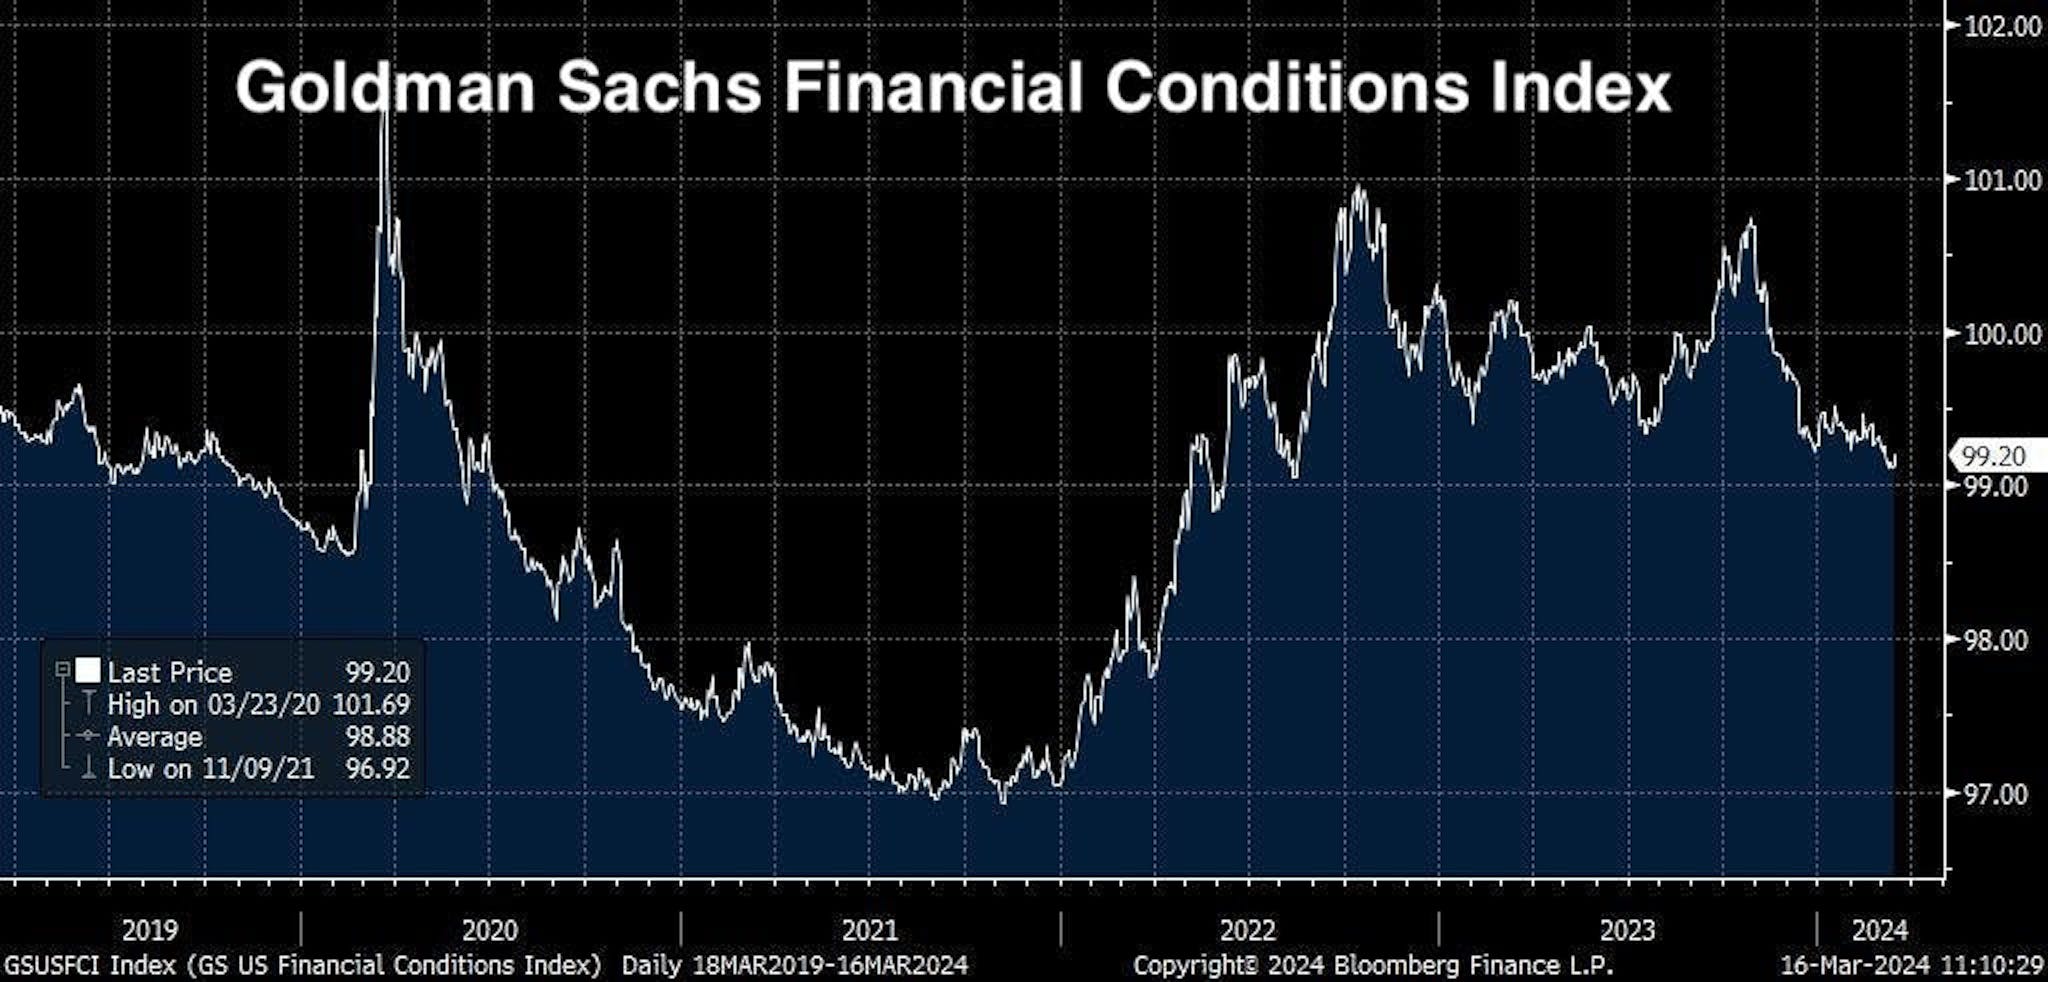 Goldman Sachs Financial Conditions Index